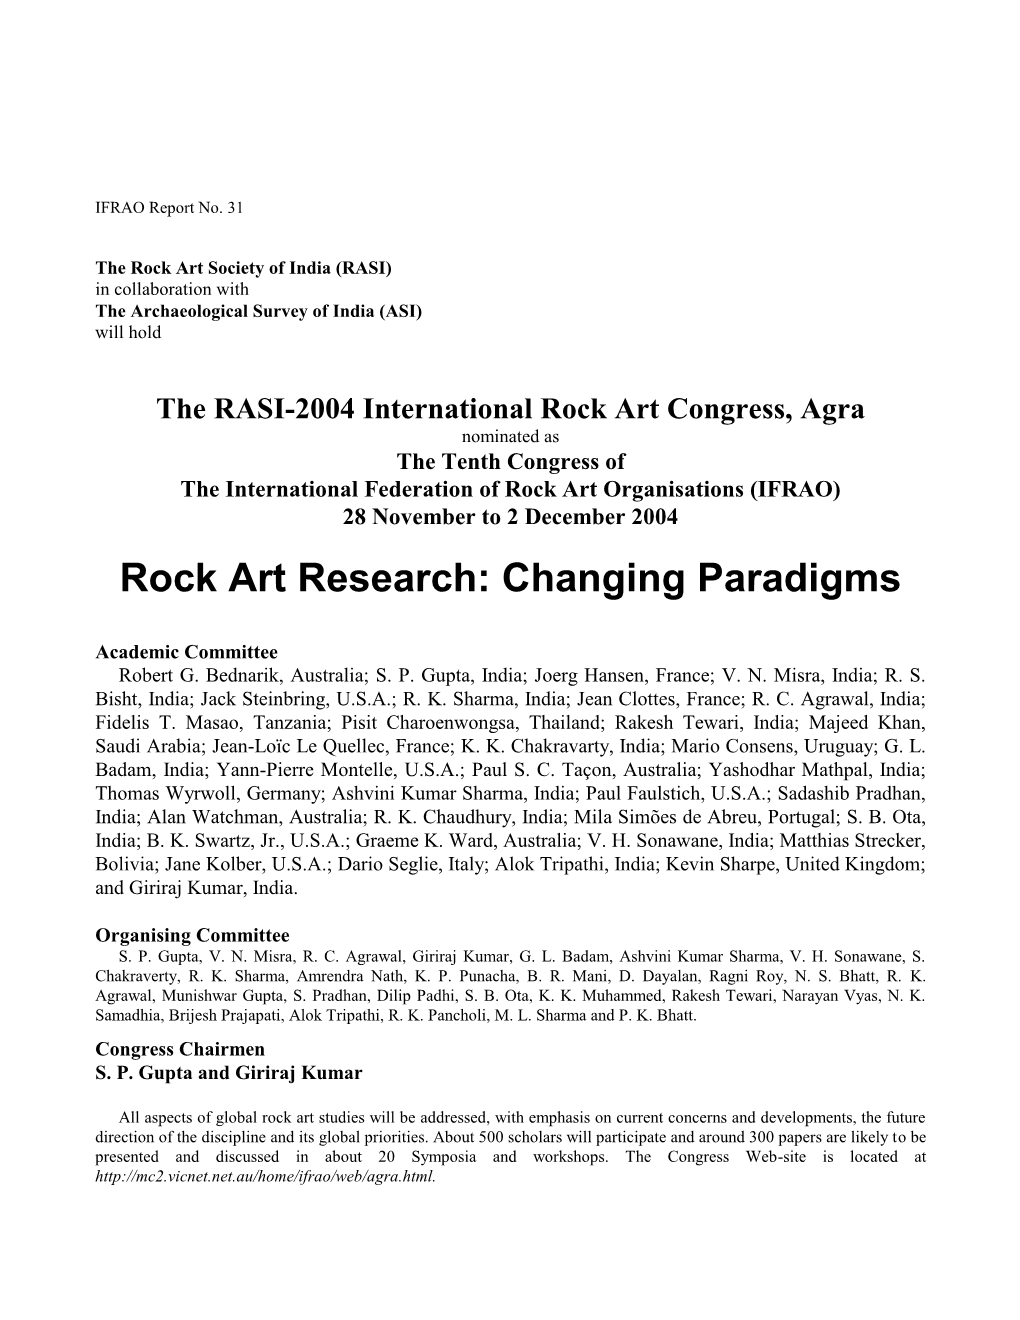 Rock Art Research: Changing Paradigms